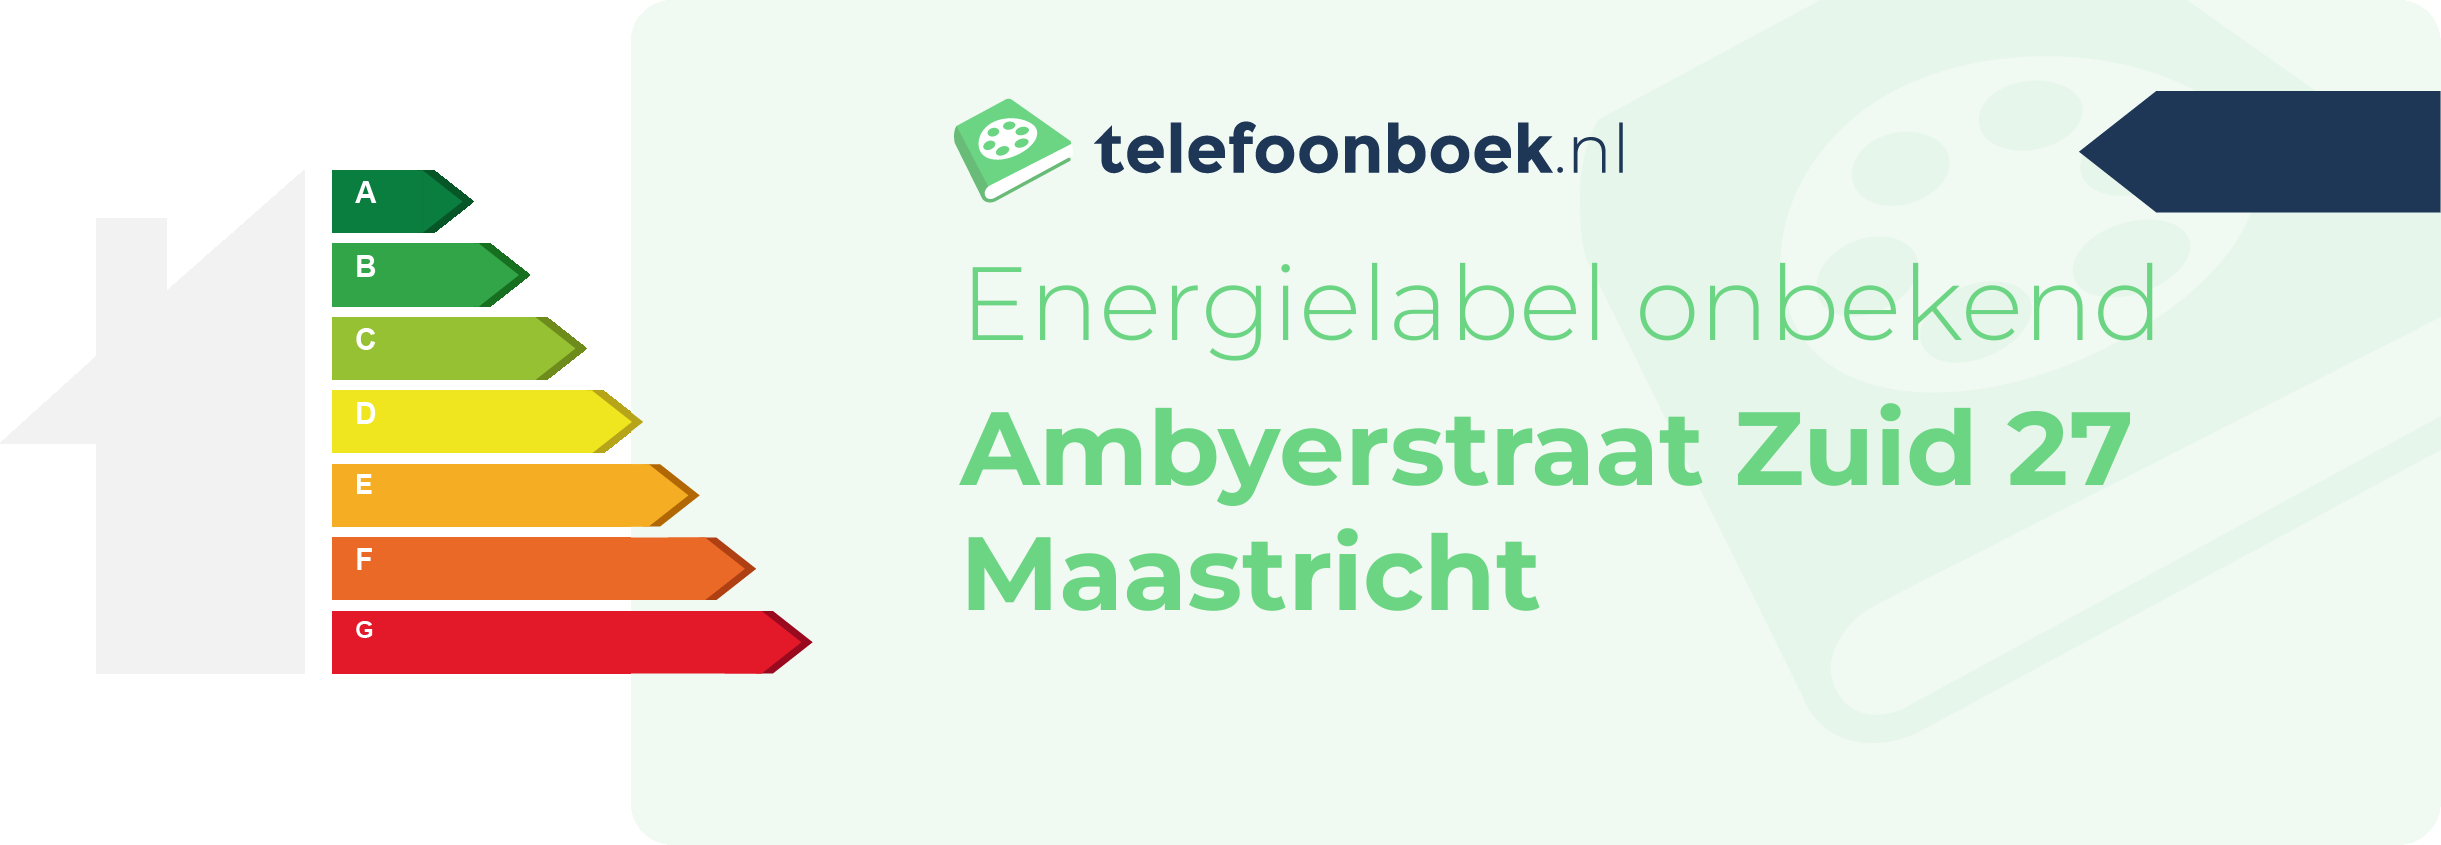 Energielabel Ambyerstraat Zuid 27 Maastricht